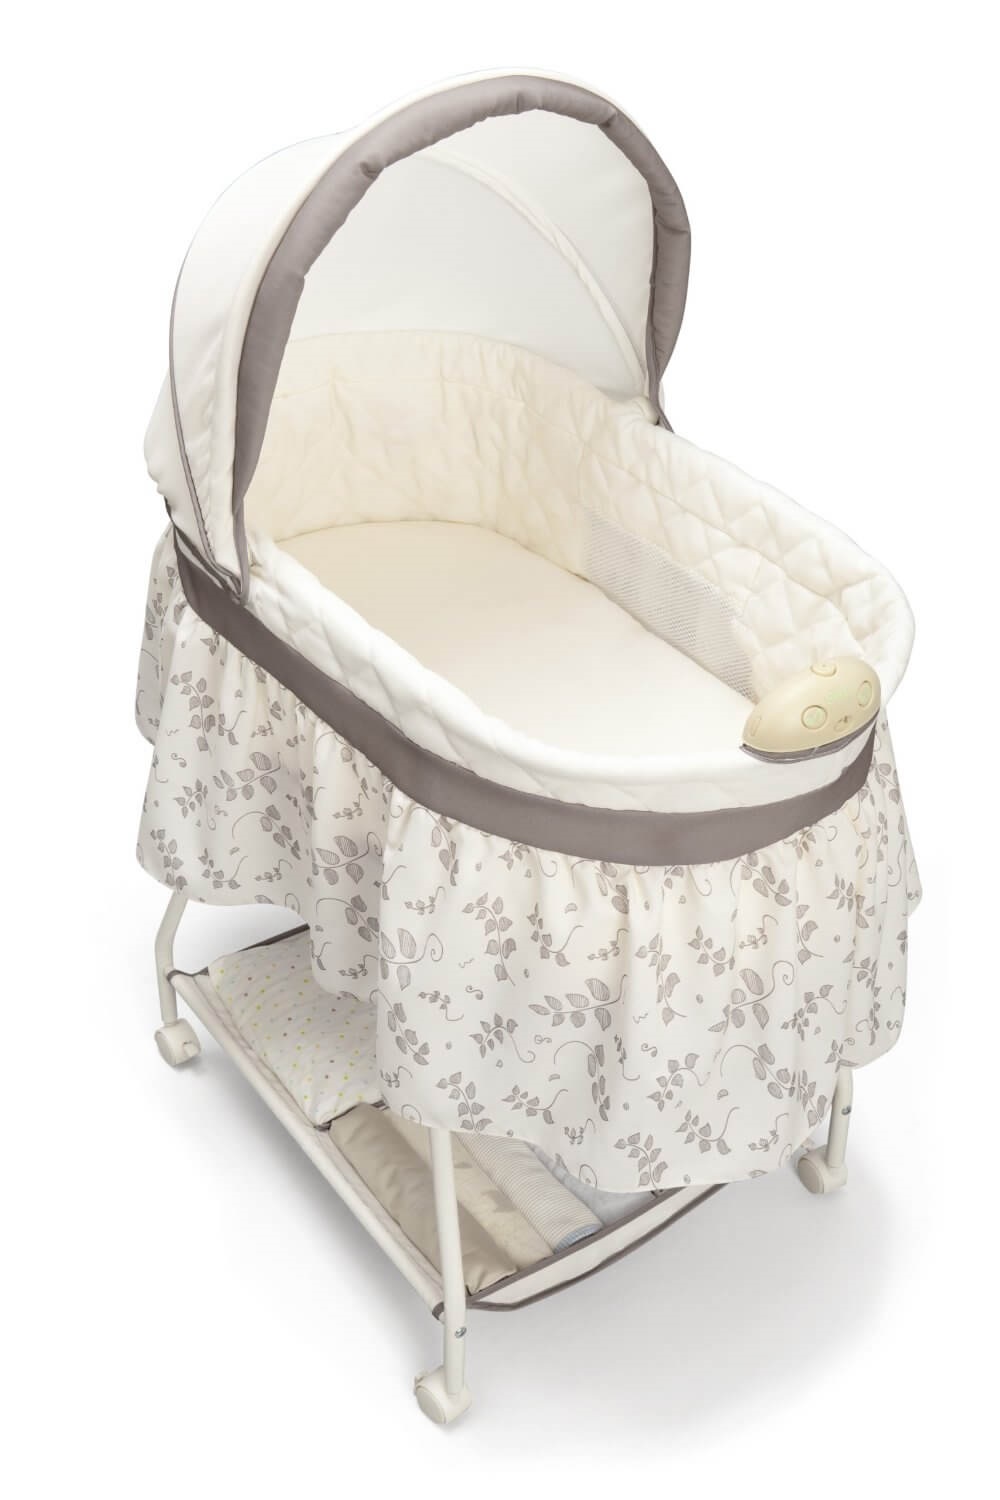 small bassinet for newborn